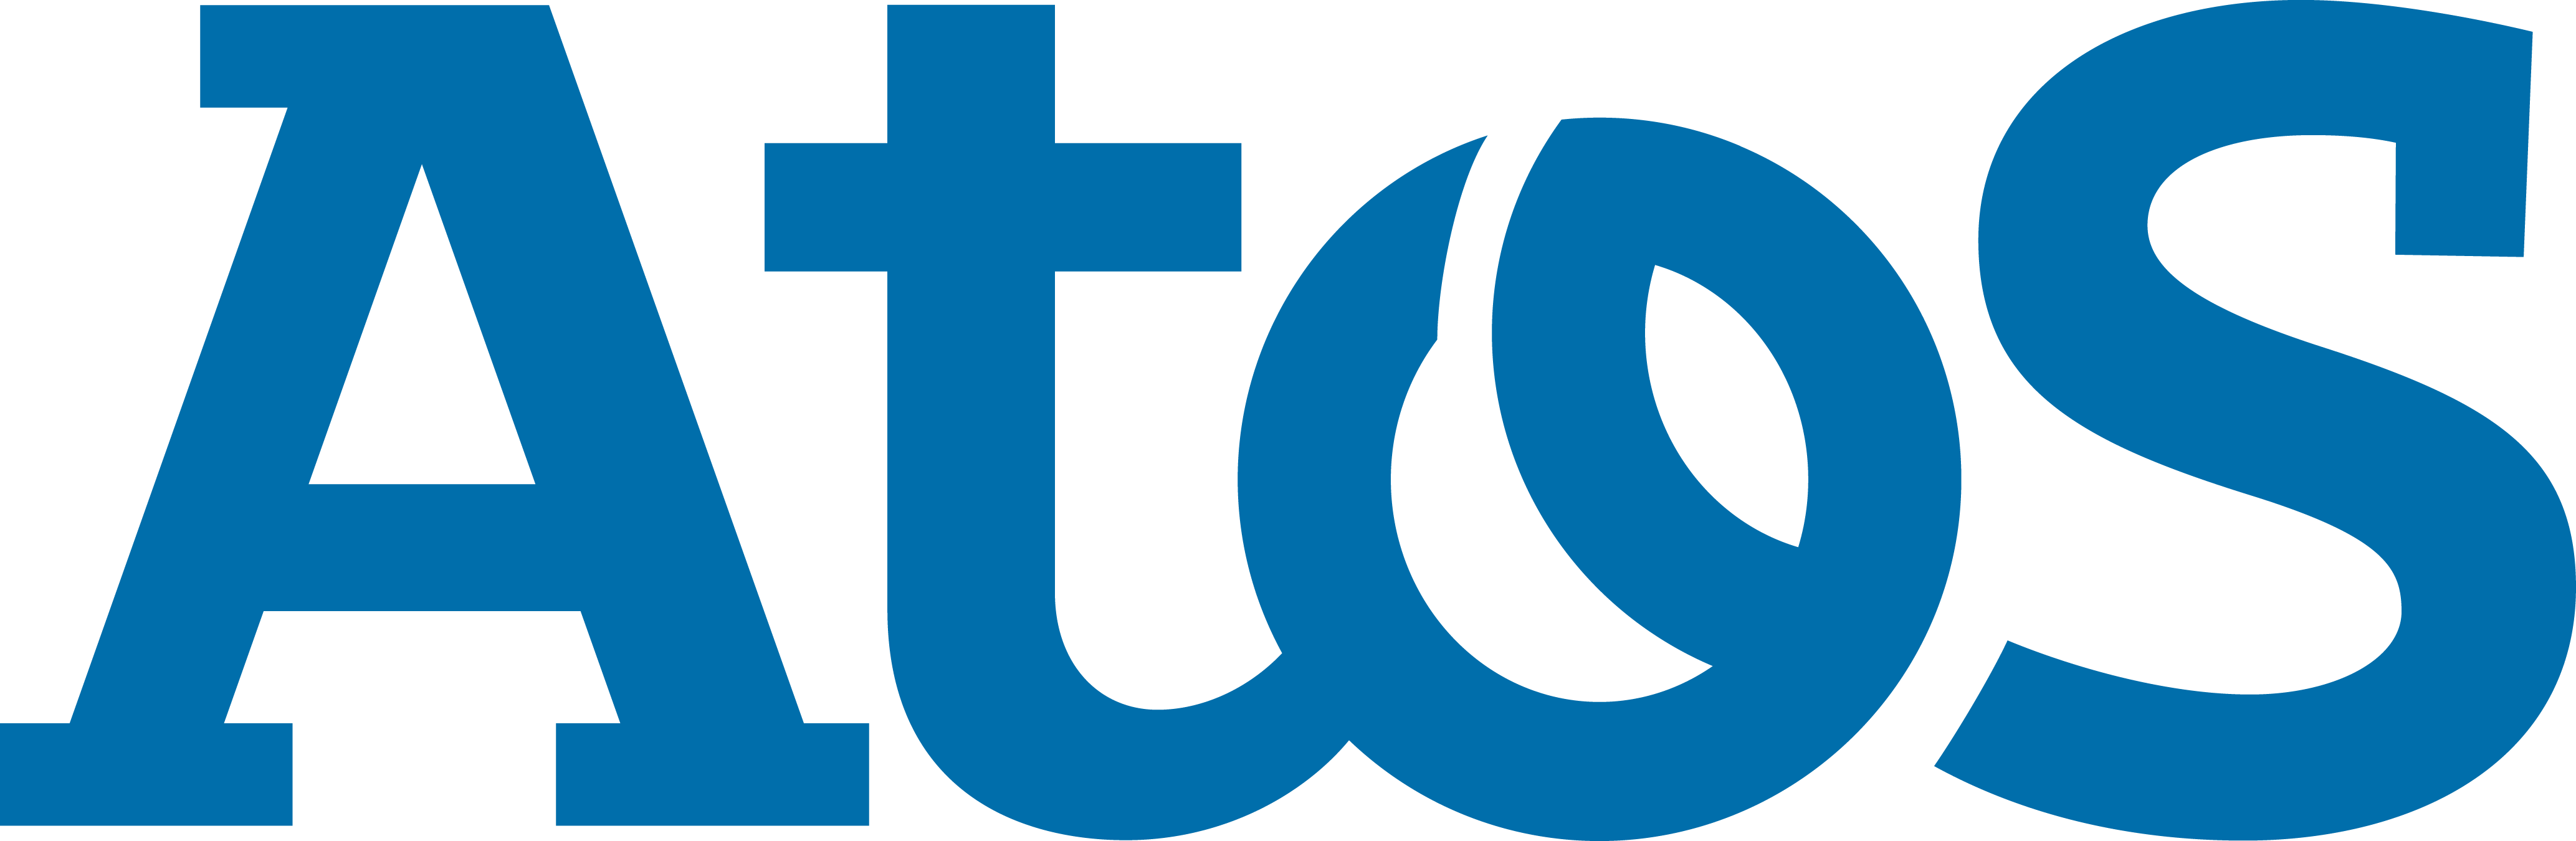 Atos_Logo_CMYK - Kopie